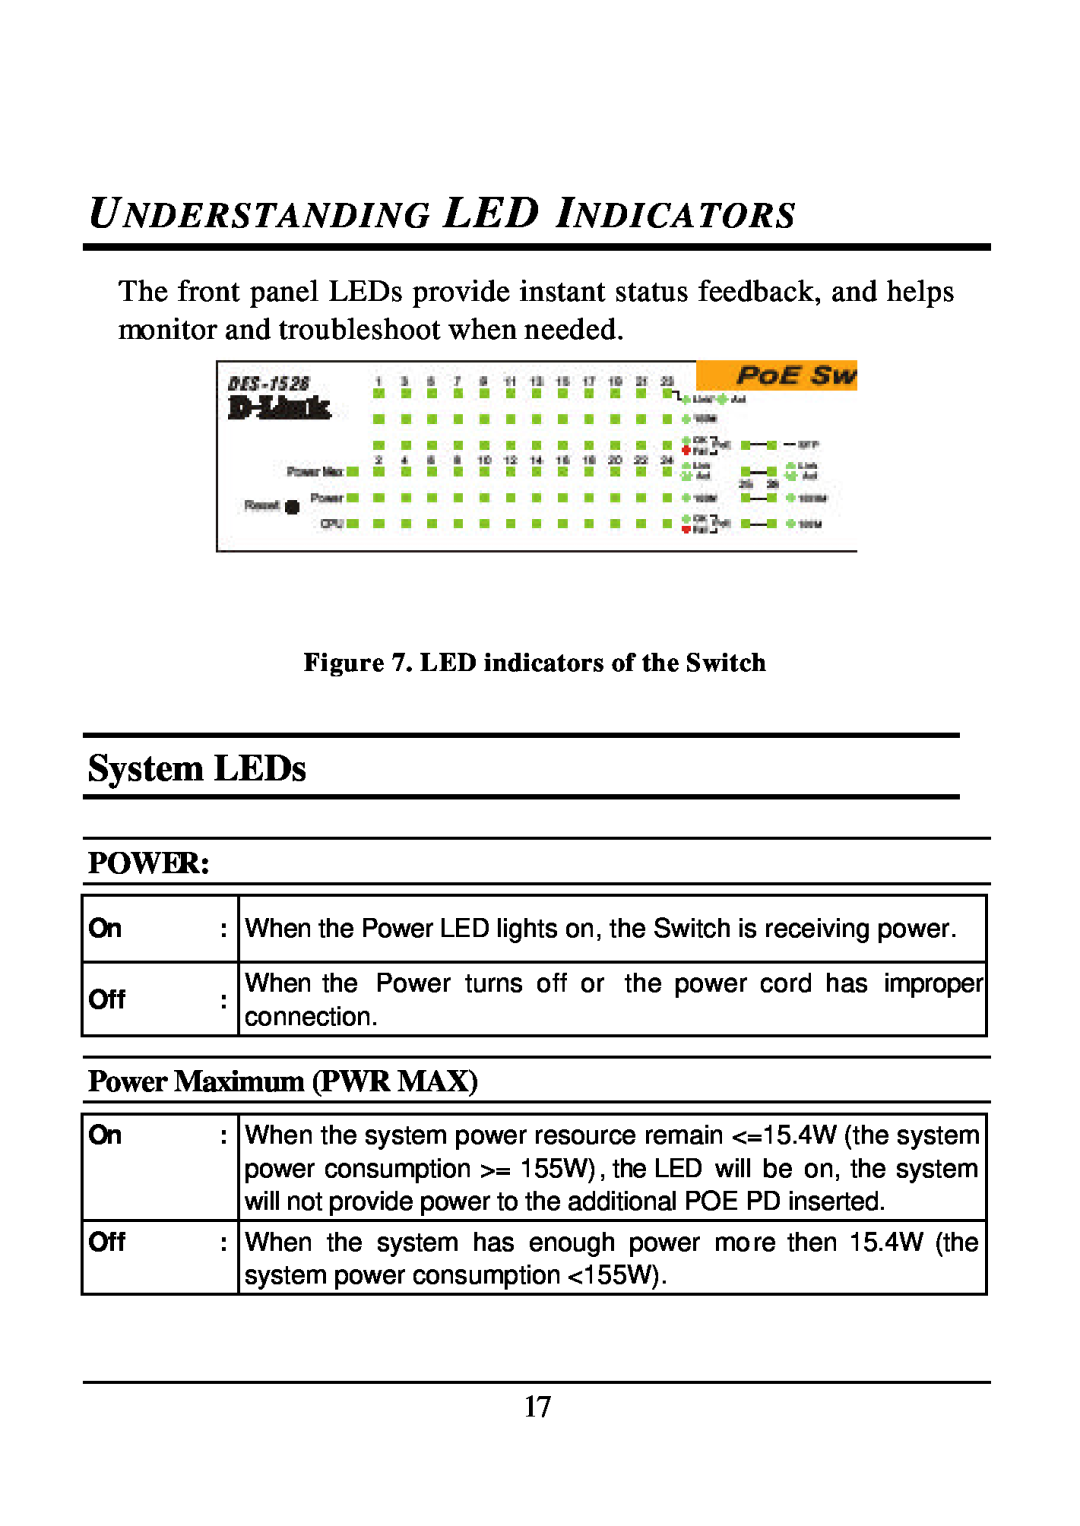 D-Link DES-1526 manual System LEDs, Understanding Led Indicators, LED indicators of the Switch 